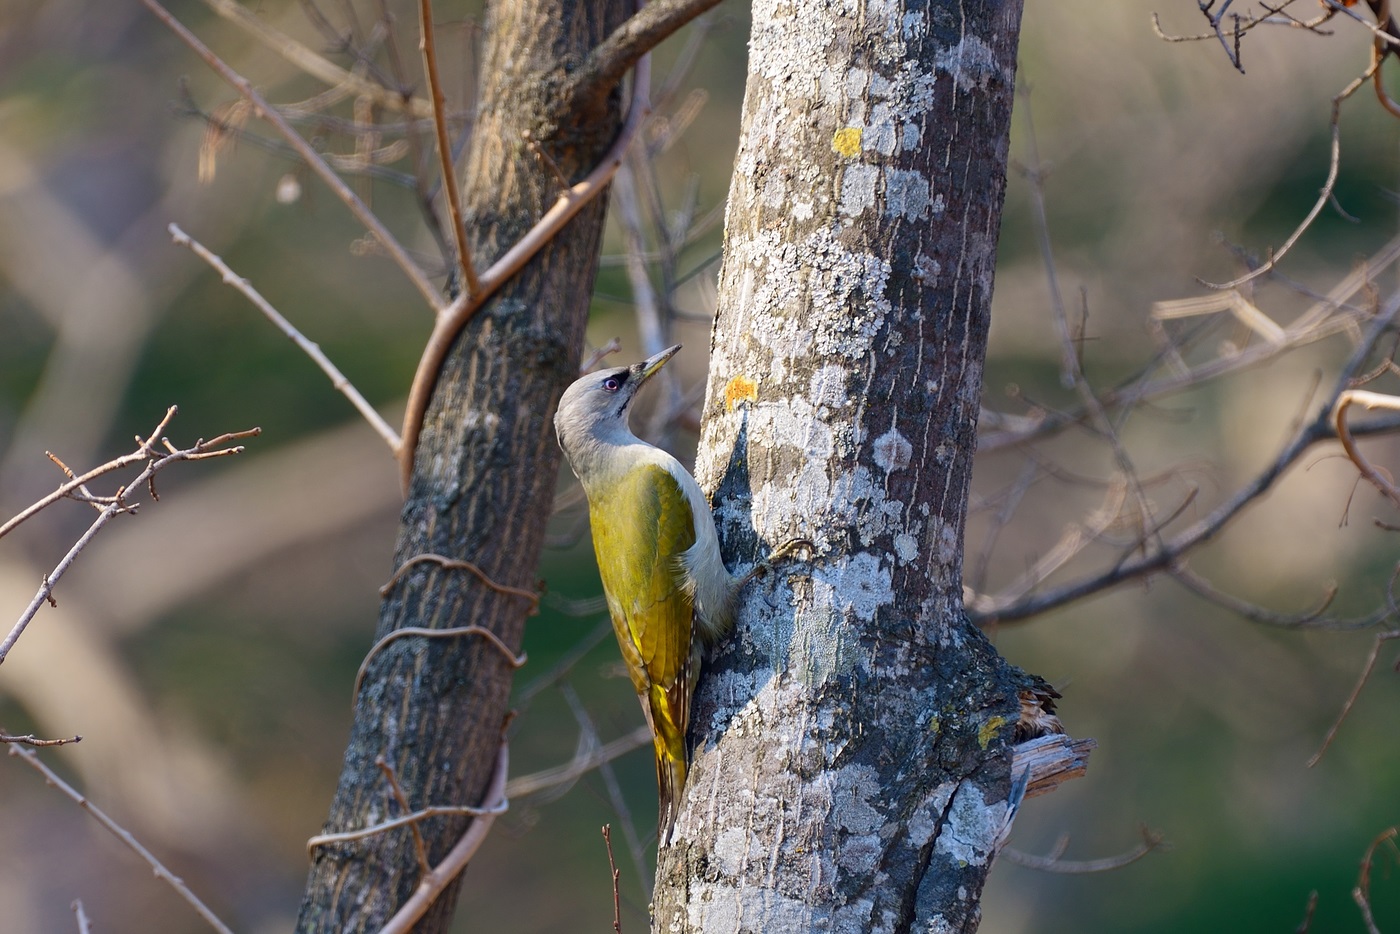 Goa-headed woodpecker saili mo meaai